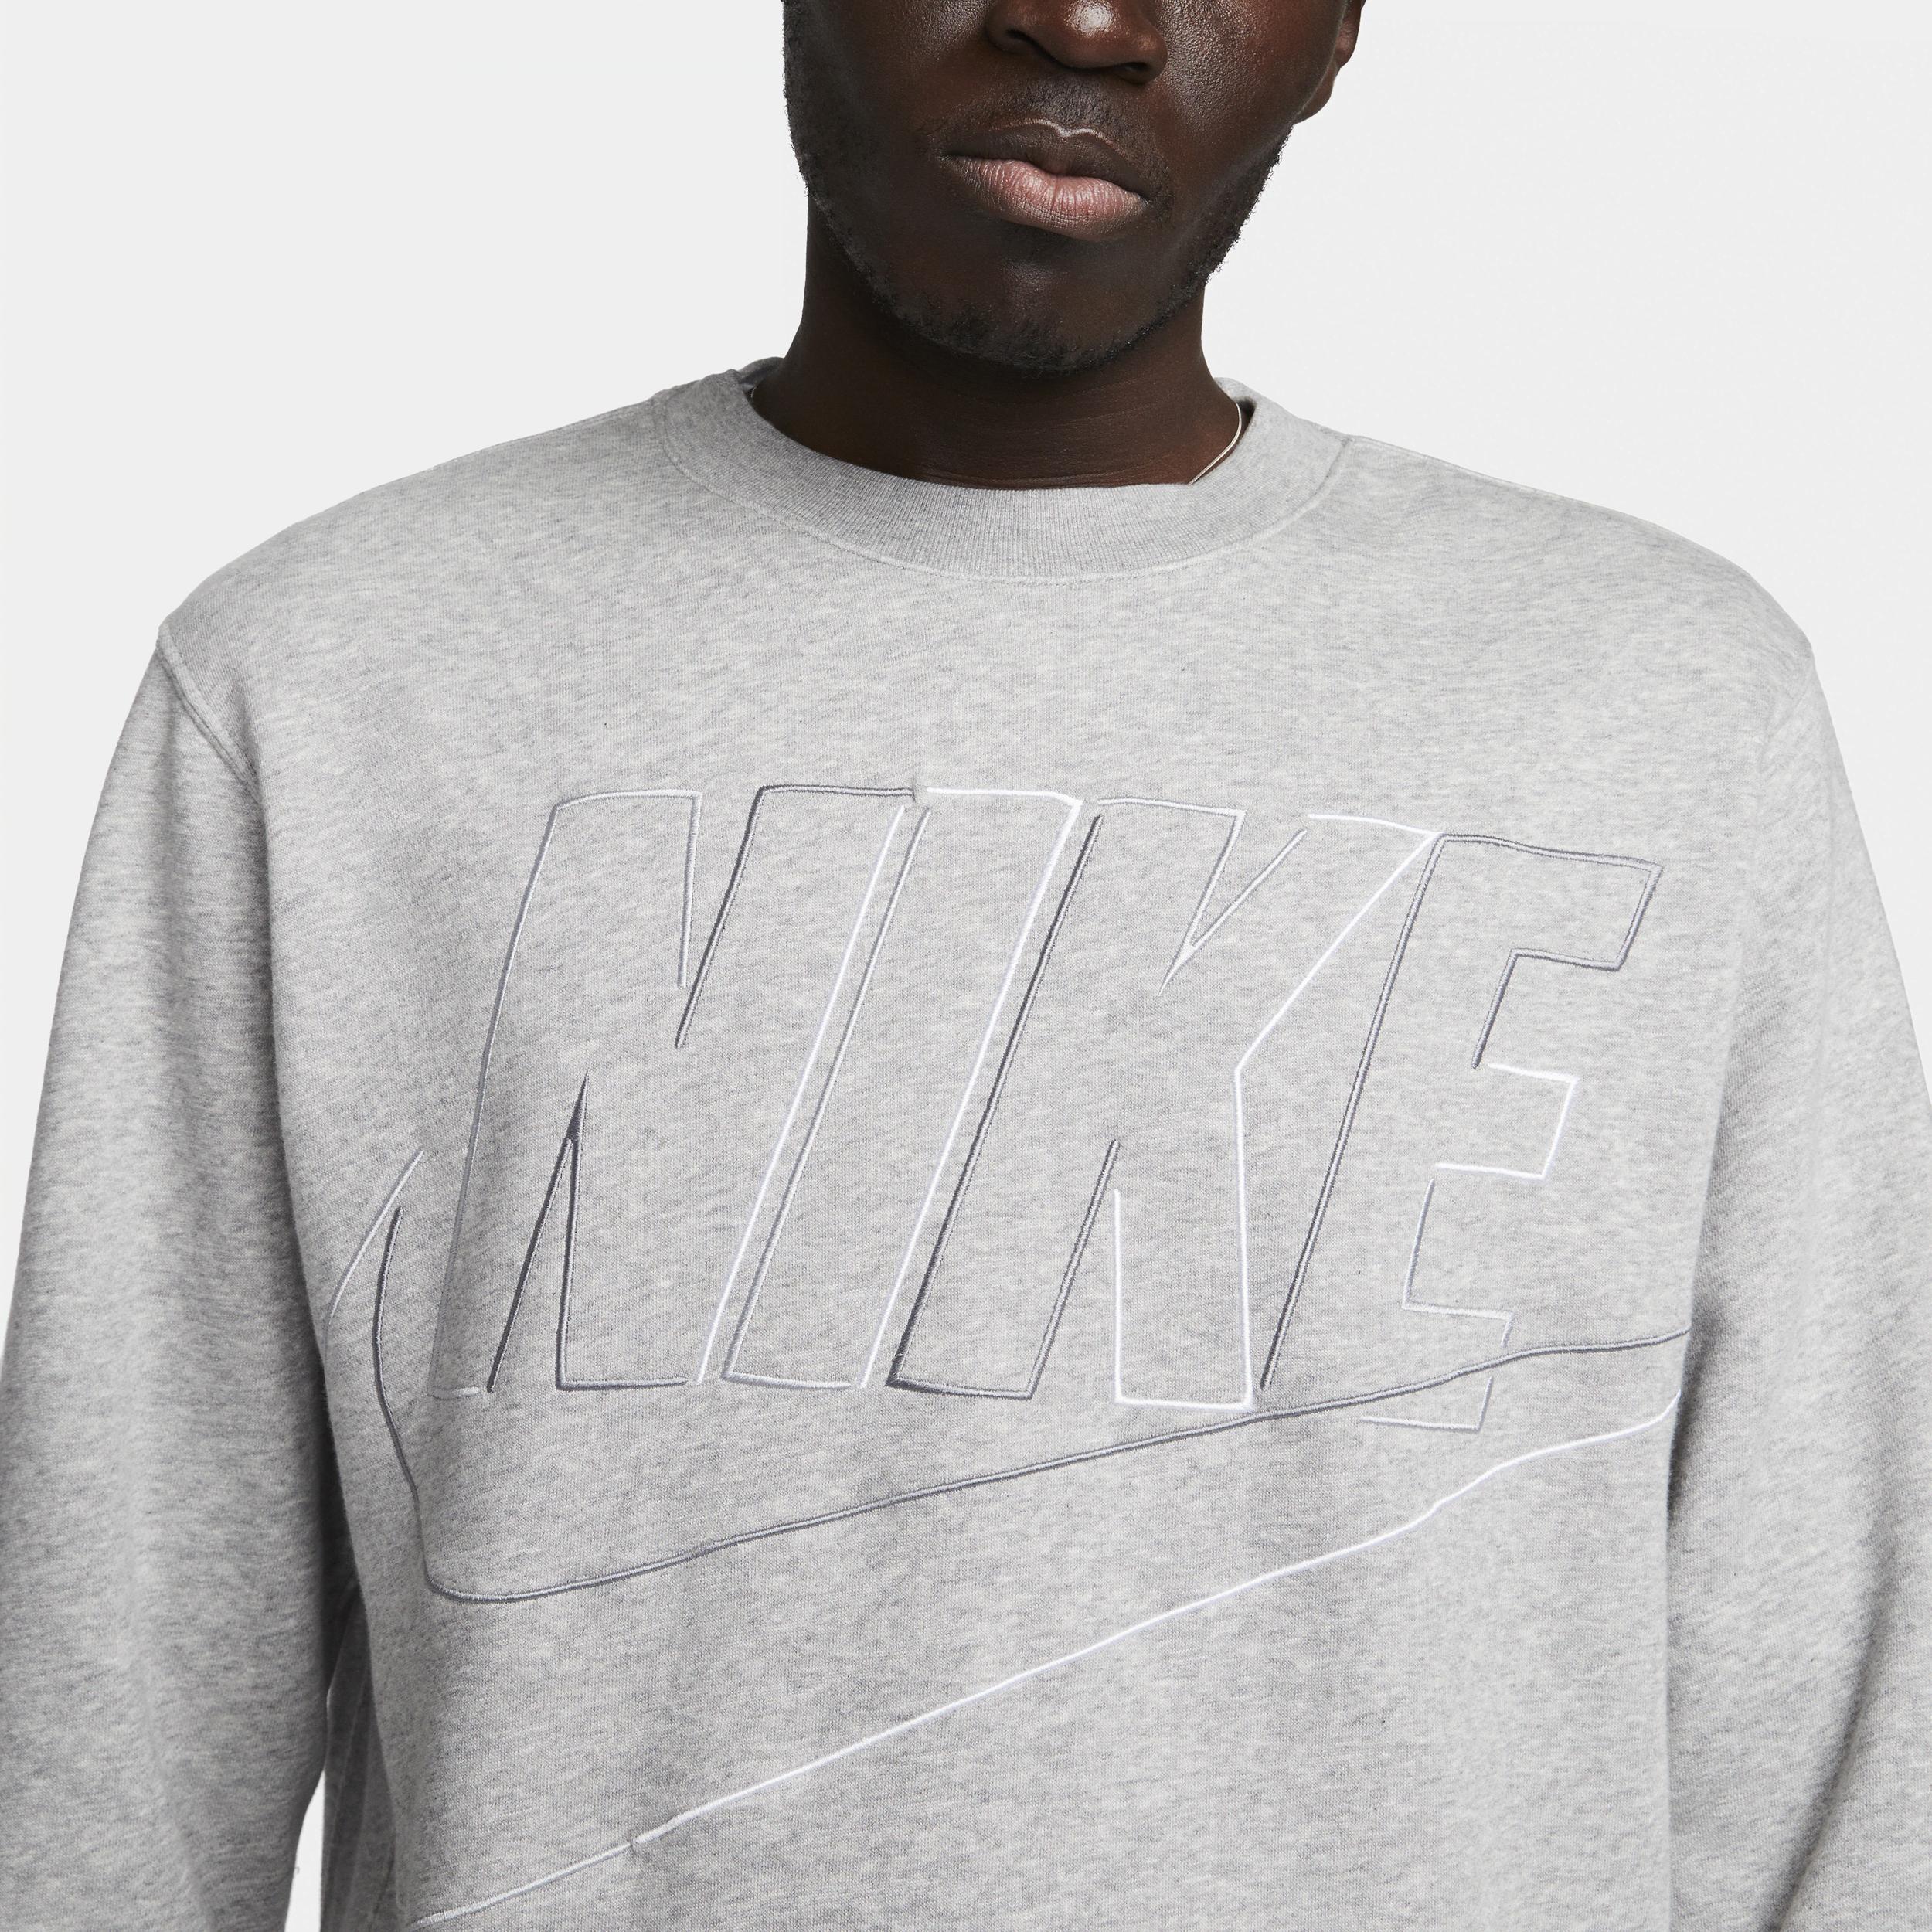 Nike Mens Club Fleece+ Crew Product Image